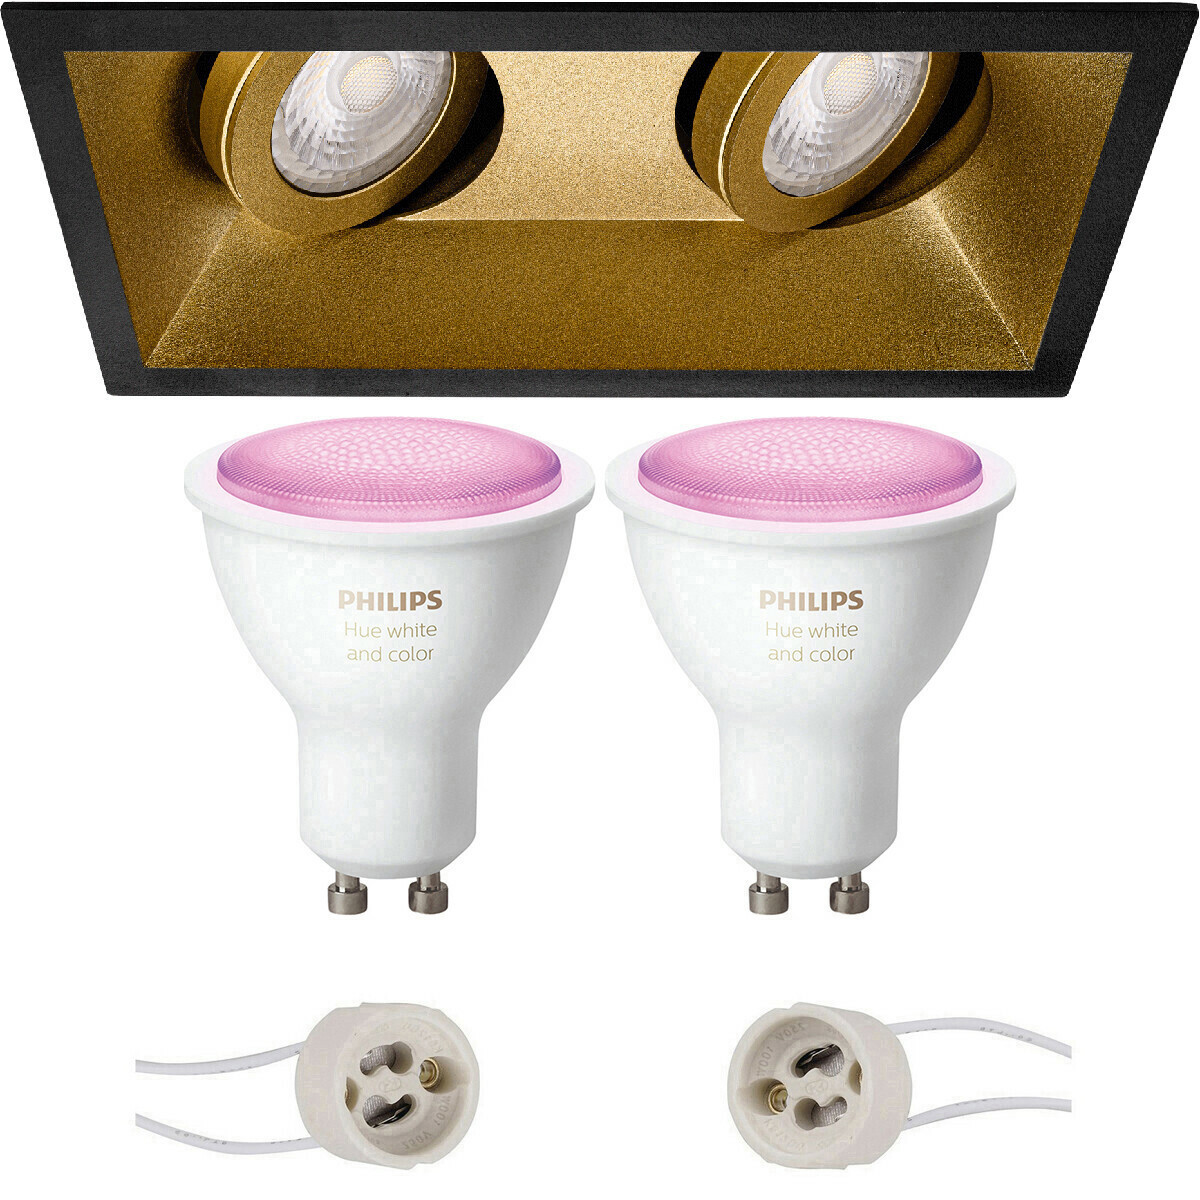 Pragmi Zano Pro - Inbouw Rechthoek Dubbel - Mat Zwart/Goud - Kantelbaar - 185x93mm - Philips Hue - LED Spot Set GU10 - White and Color Ambiance - Bluetooth